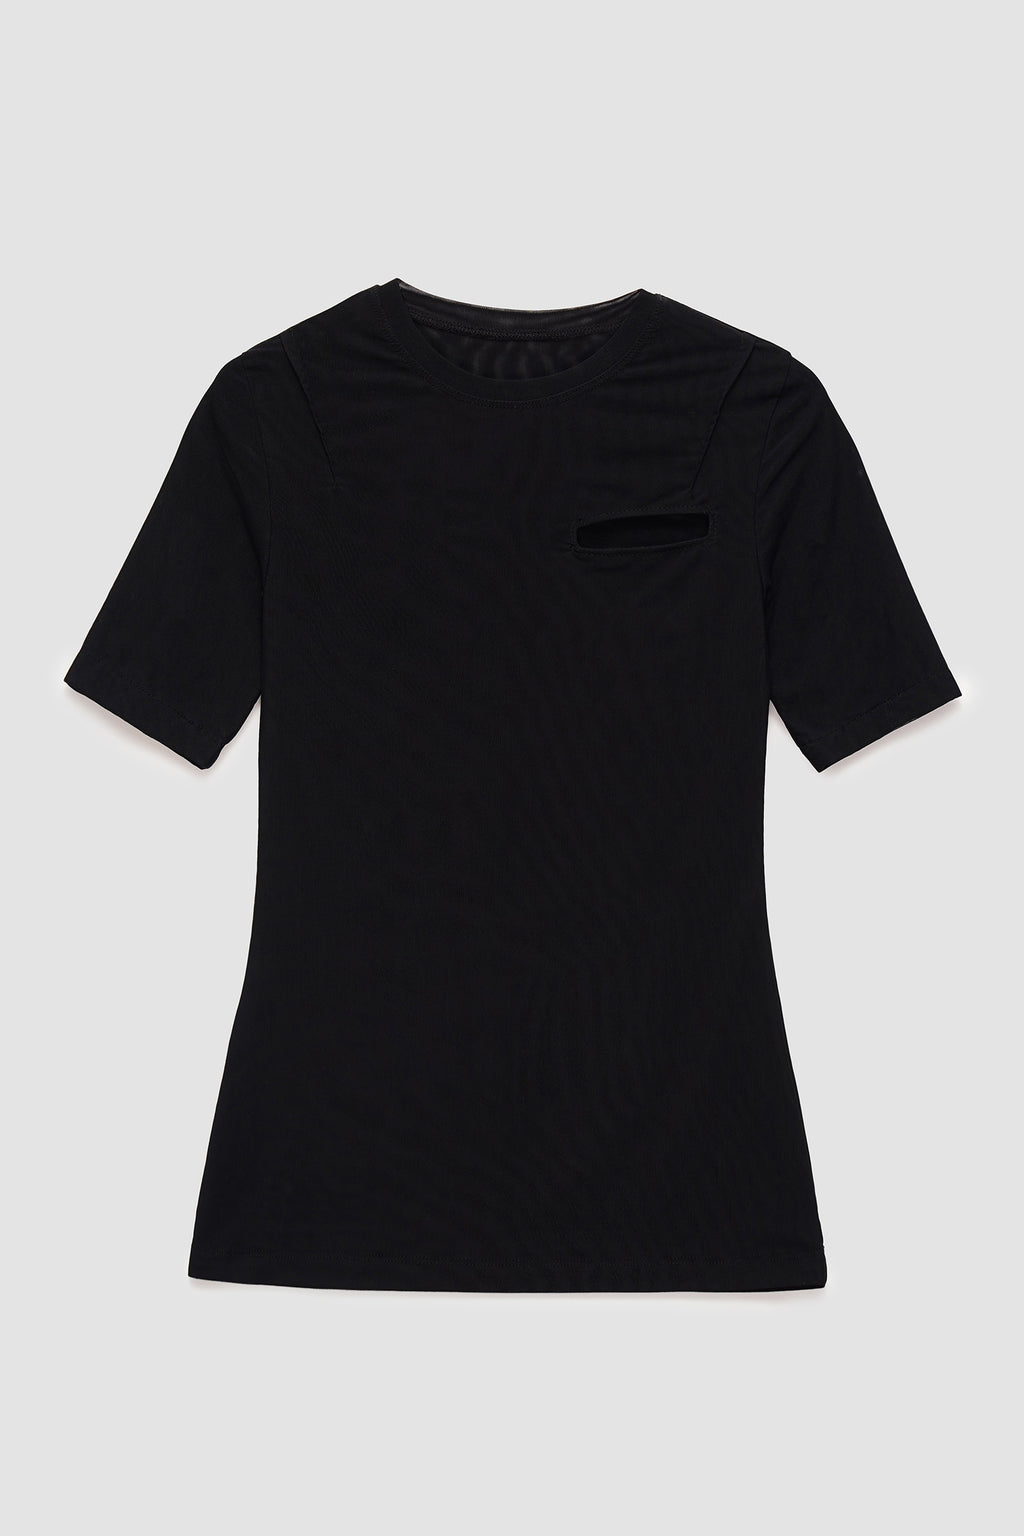 'Fake Pocket' Short-sleeve Top in Black